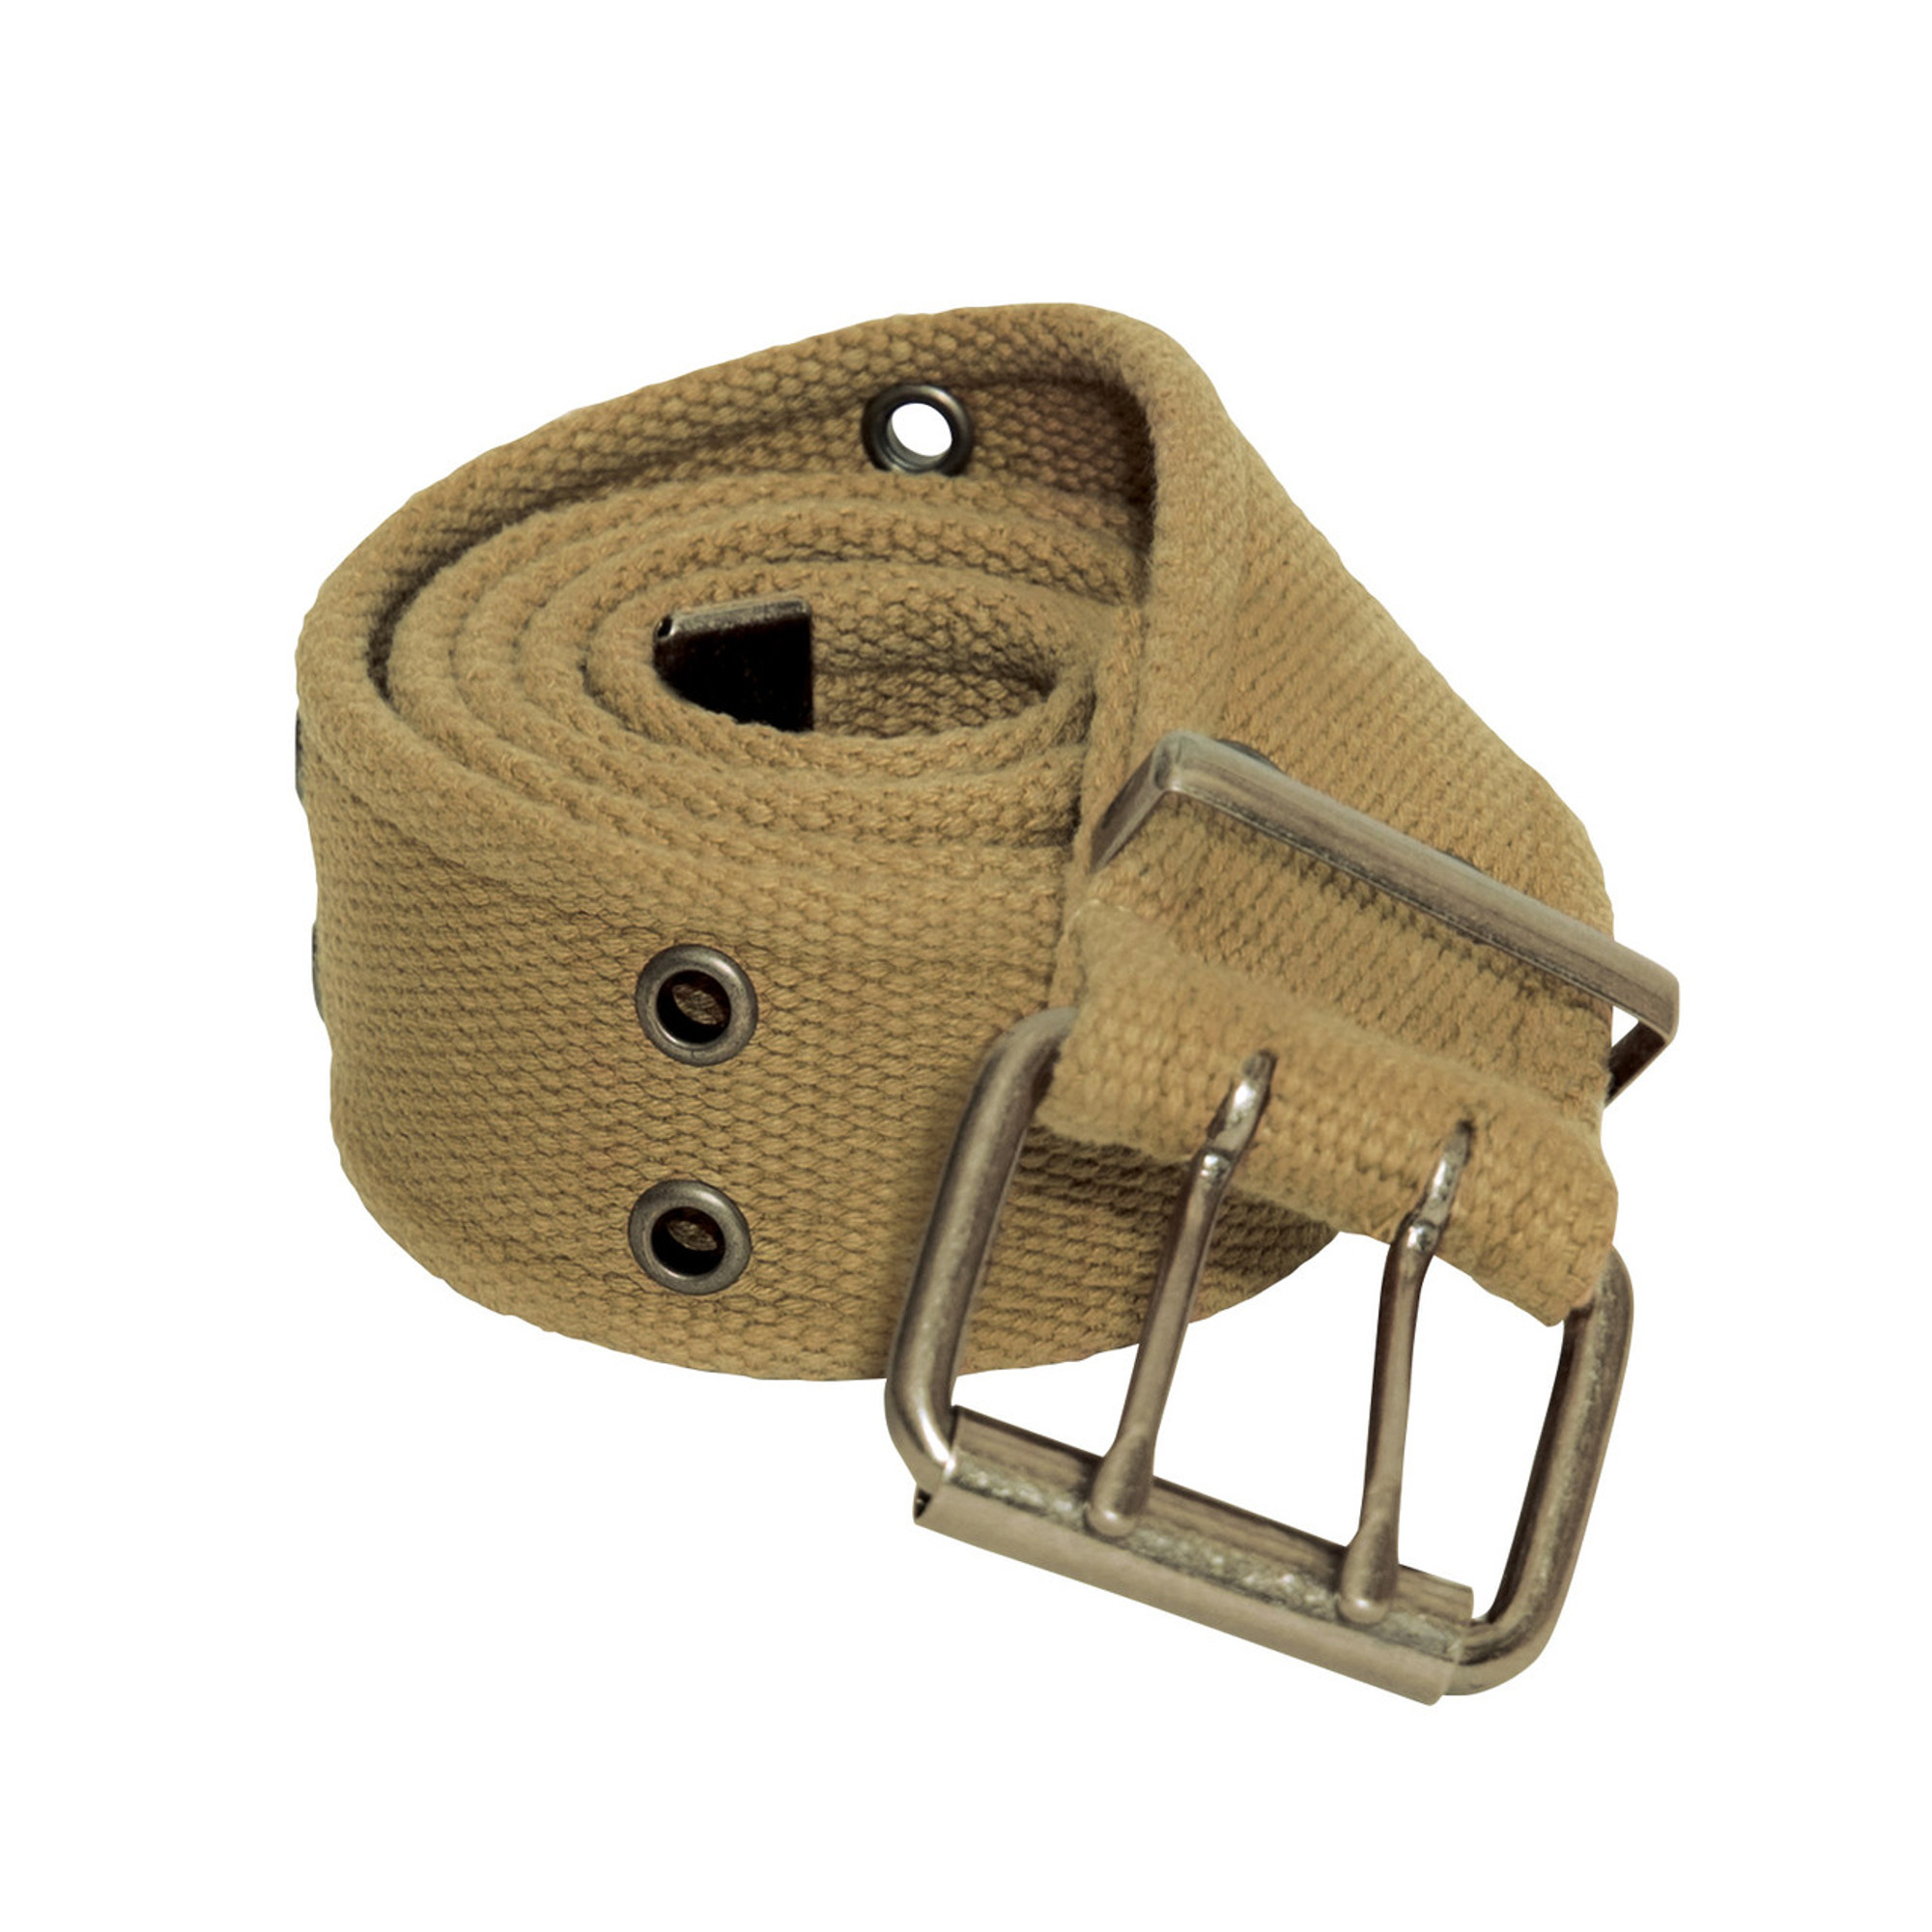 Rothco Vintage Double Prong Buckle Belt - Khaki